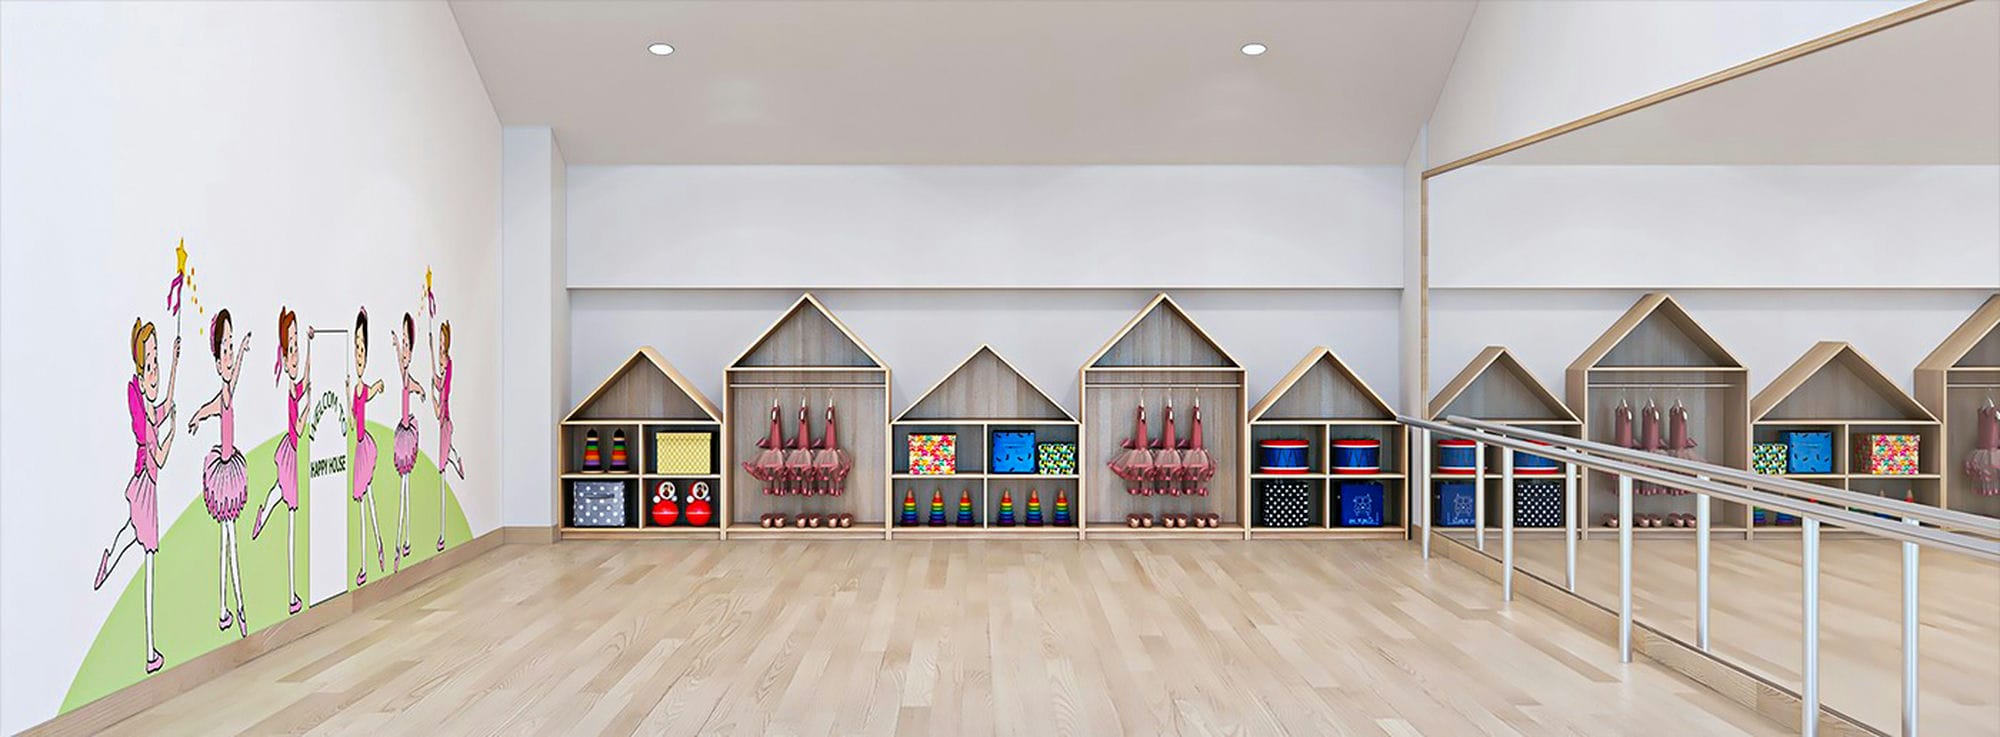 Classroom 3D Design of Happy House Preschool | NTDecor